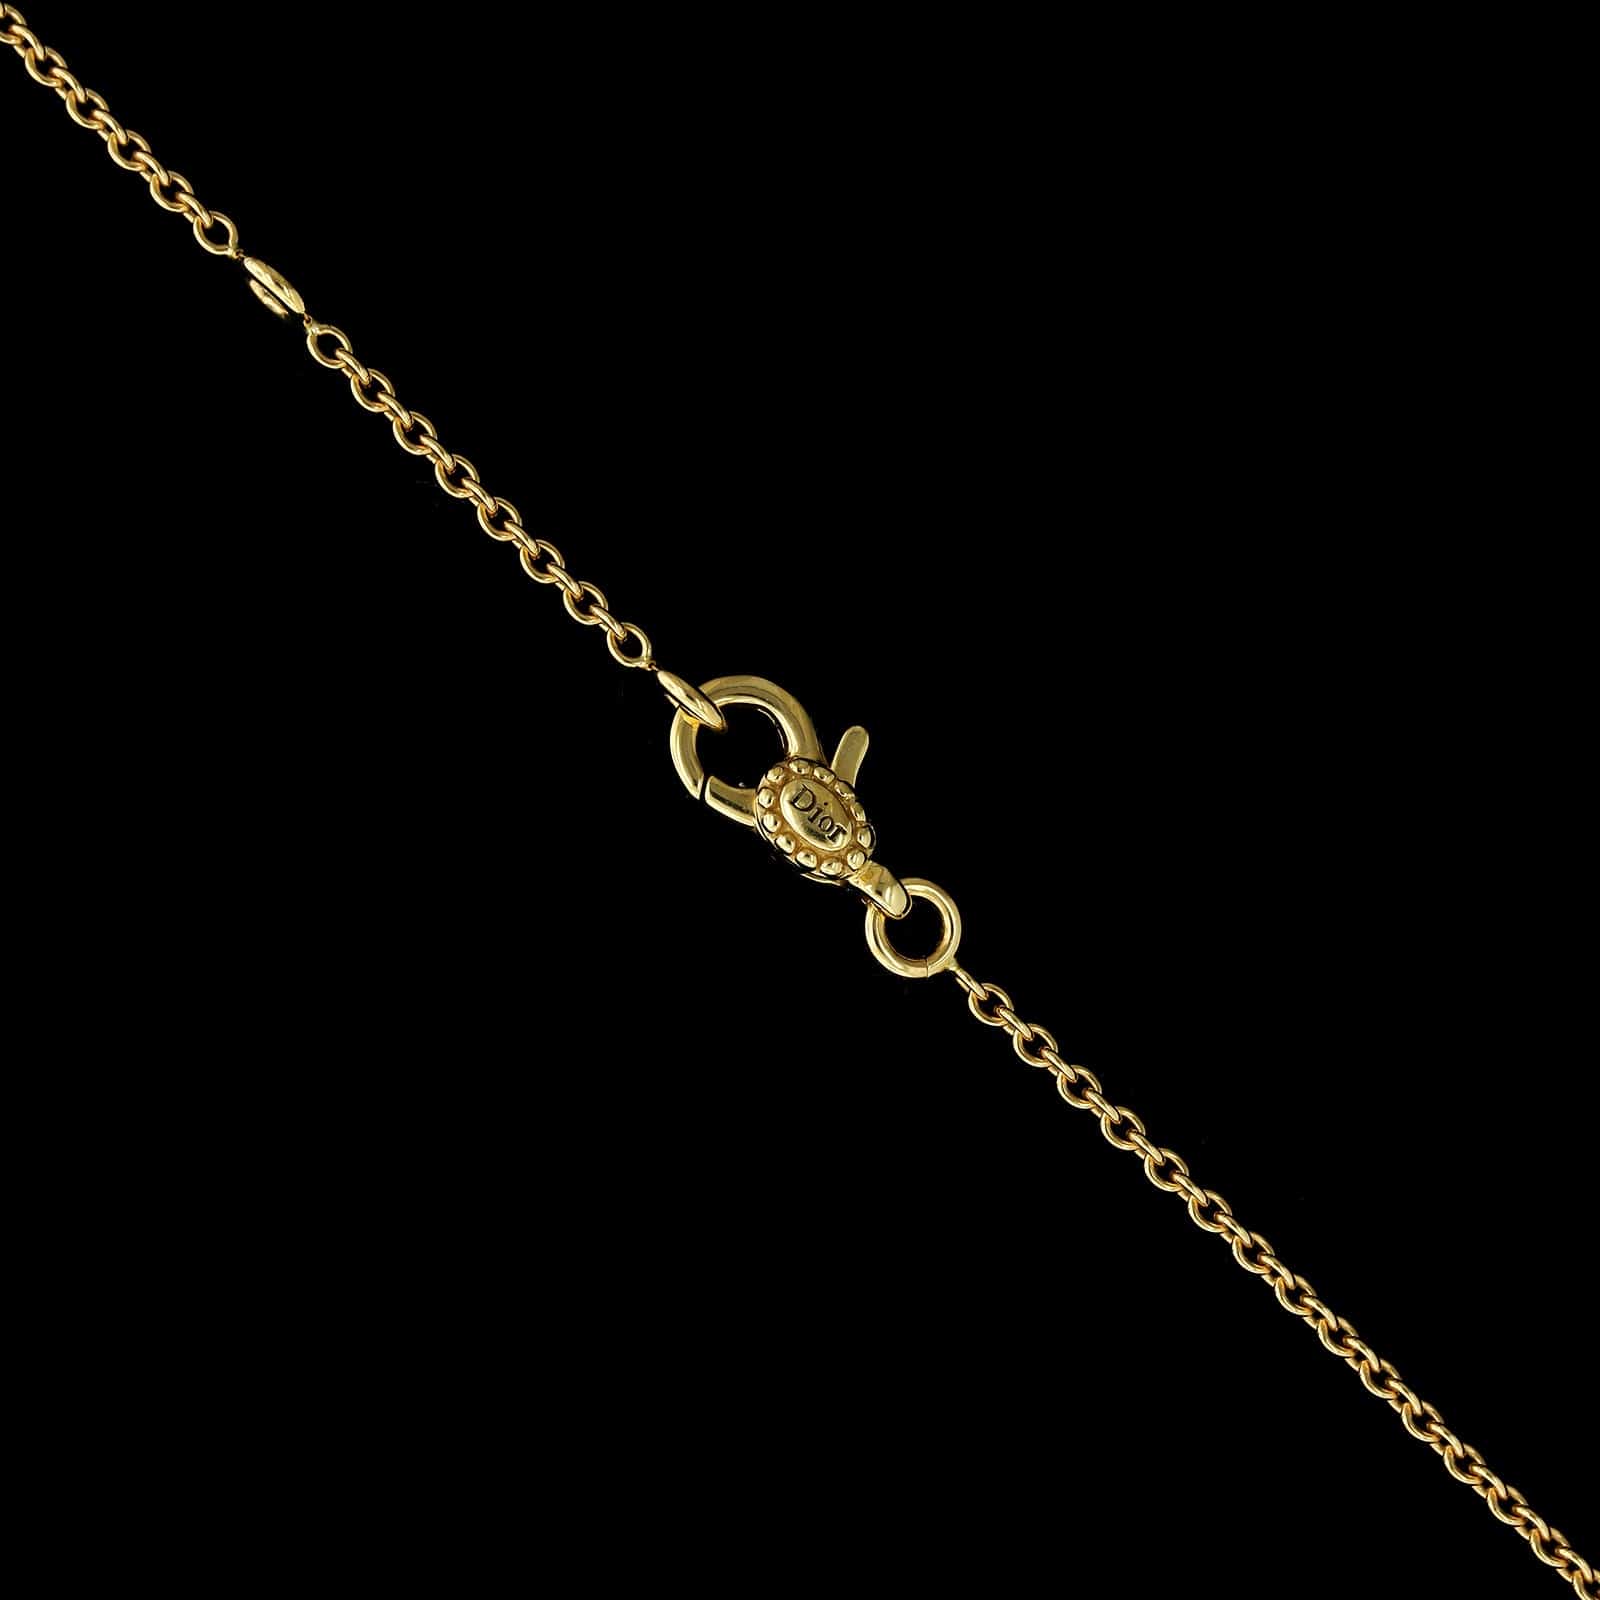 Dior 18K Yellow Gold Estate Emerald 'Mimirose' Necklace